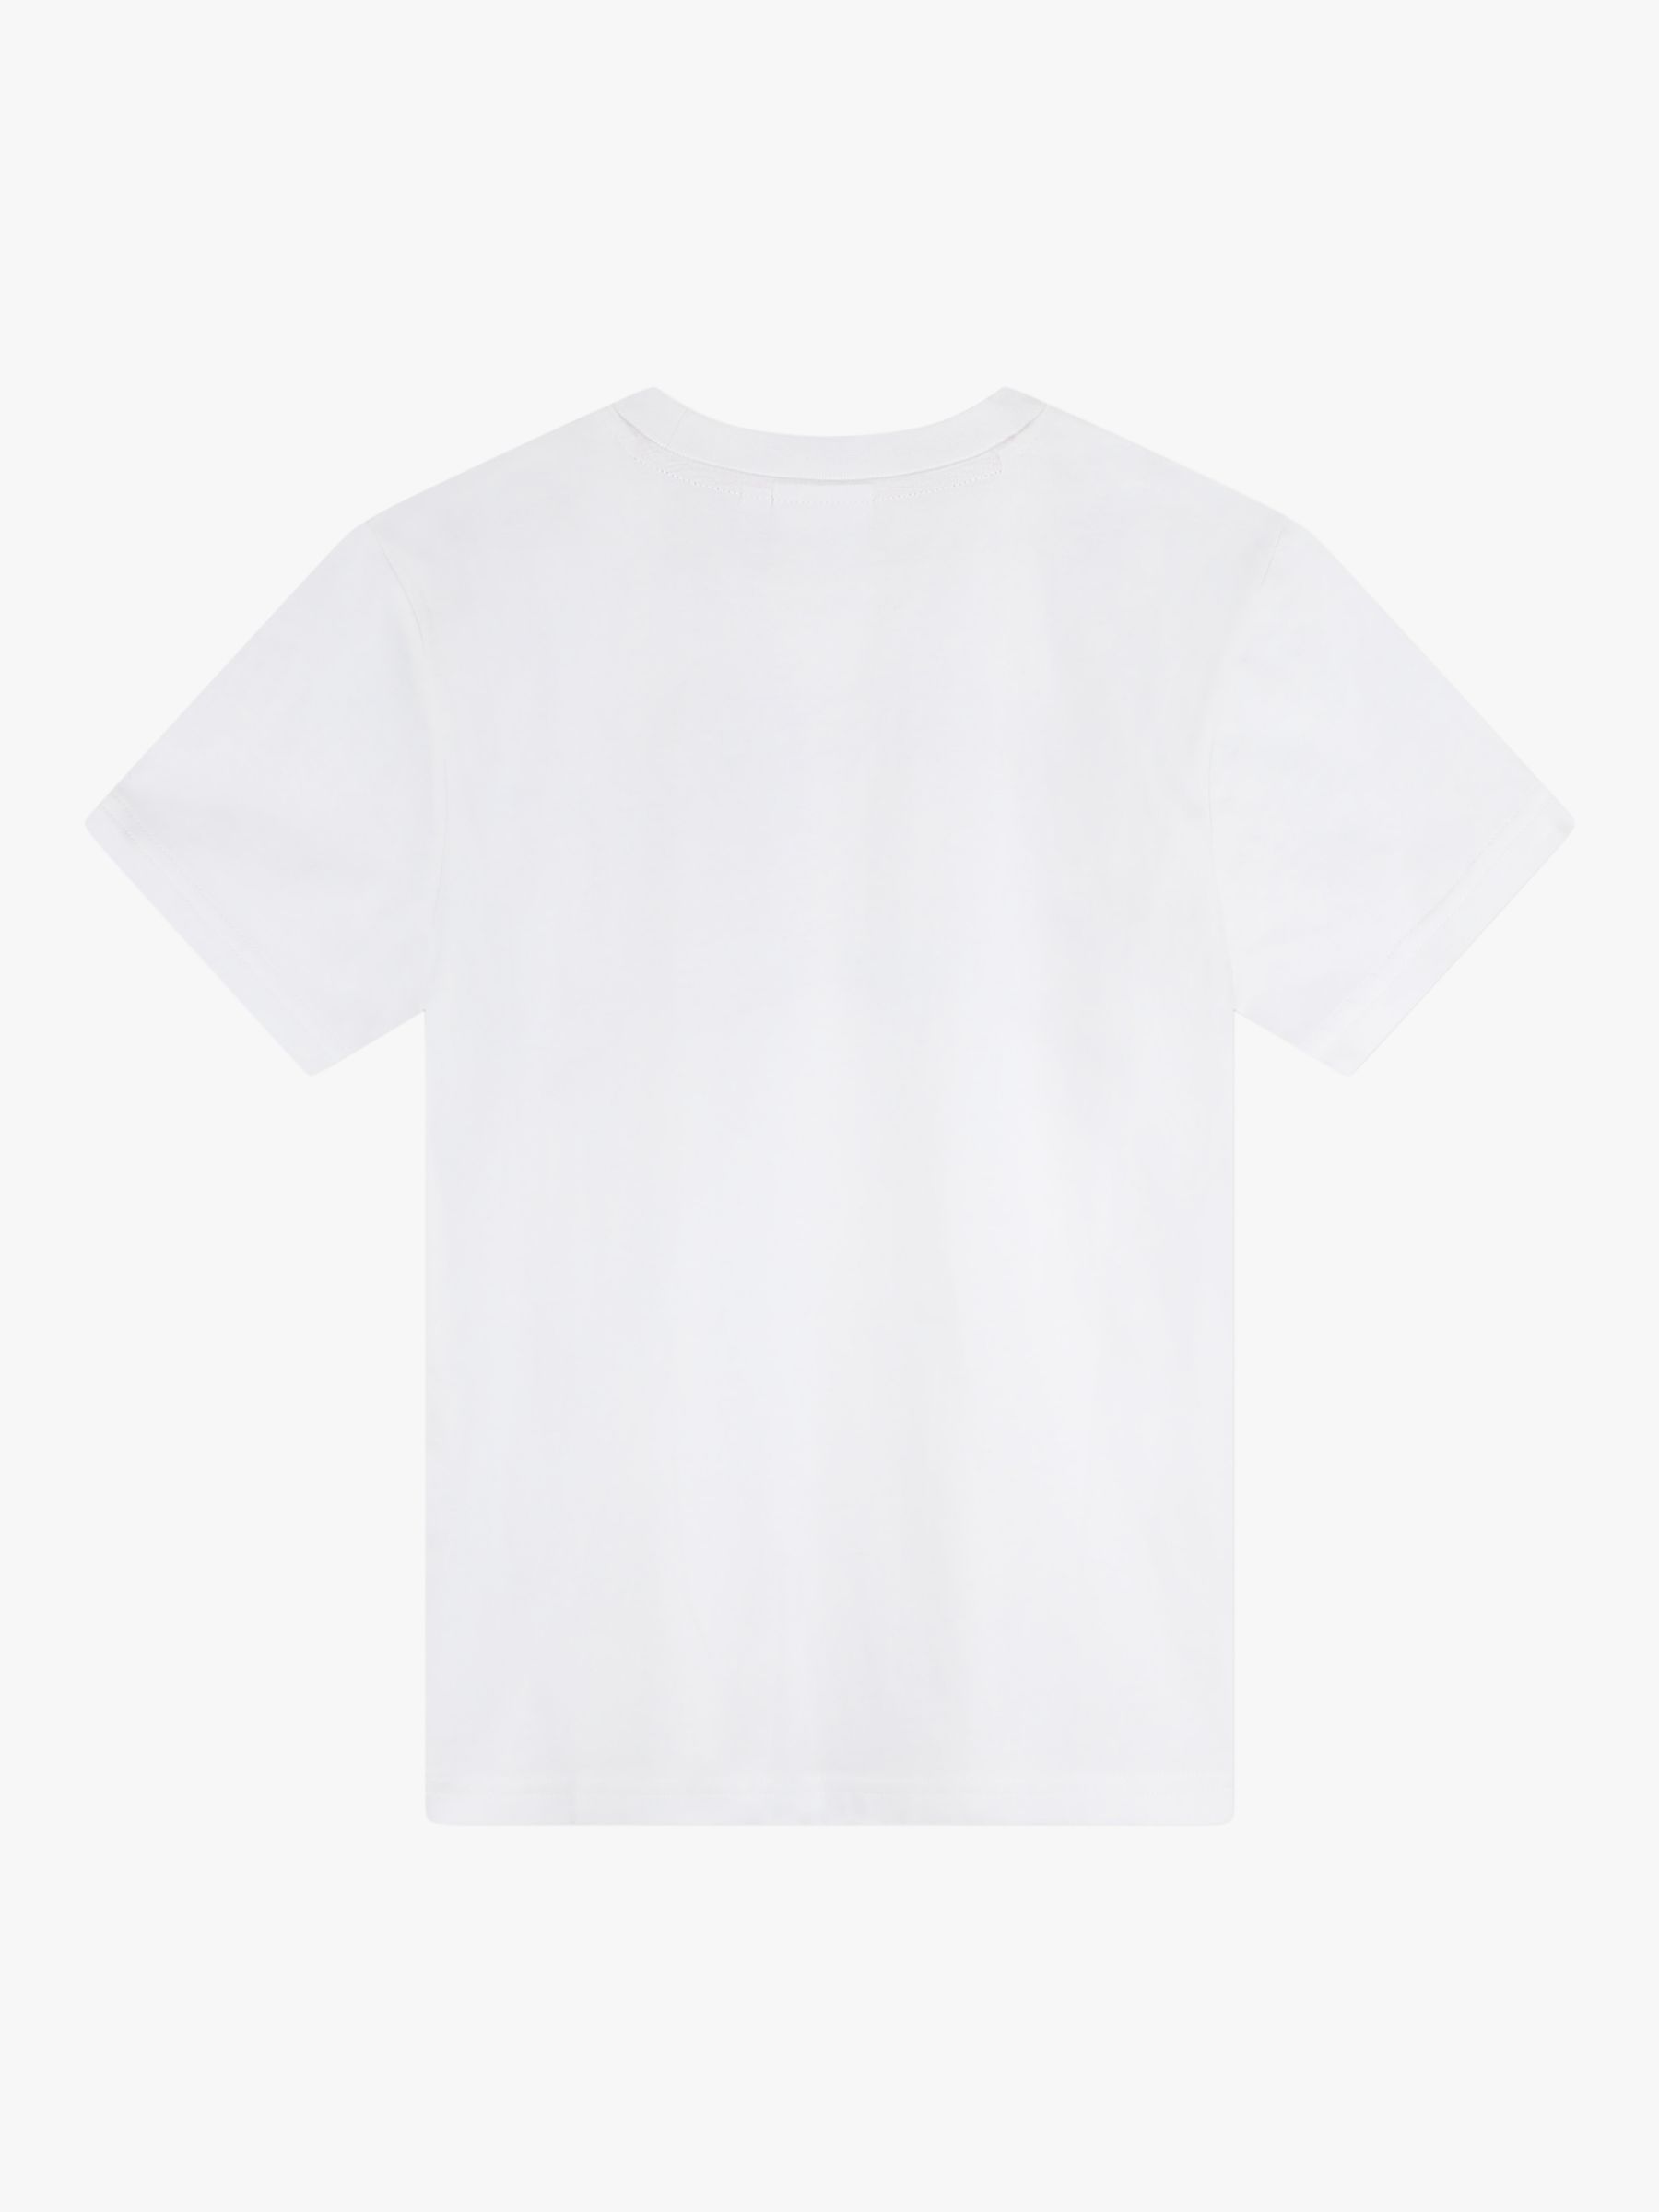 HUGO Kids' 3D Logo Print T-Shirt, White/Multi, 4 years